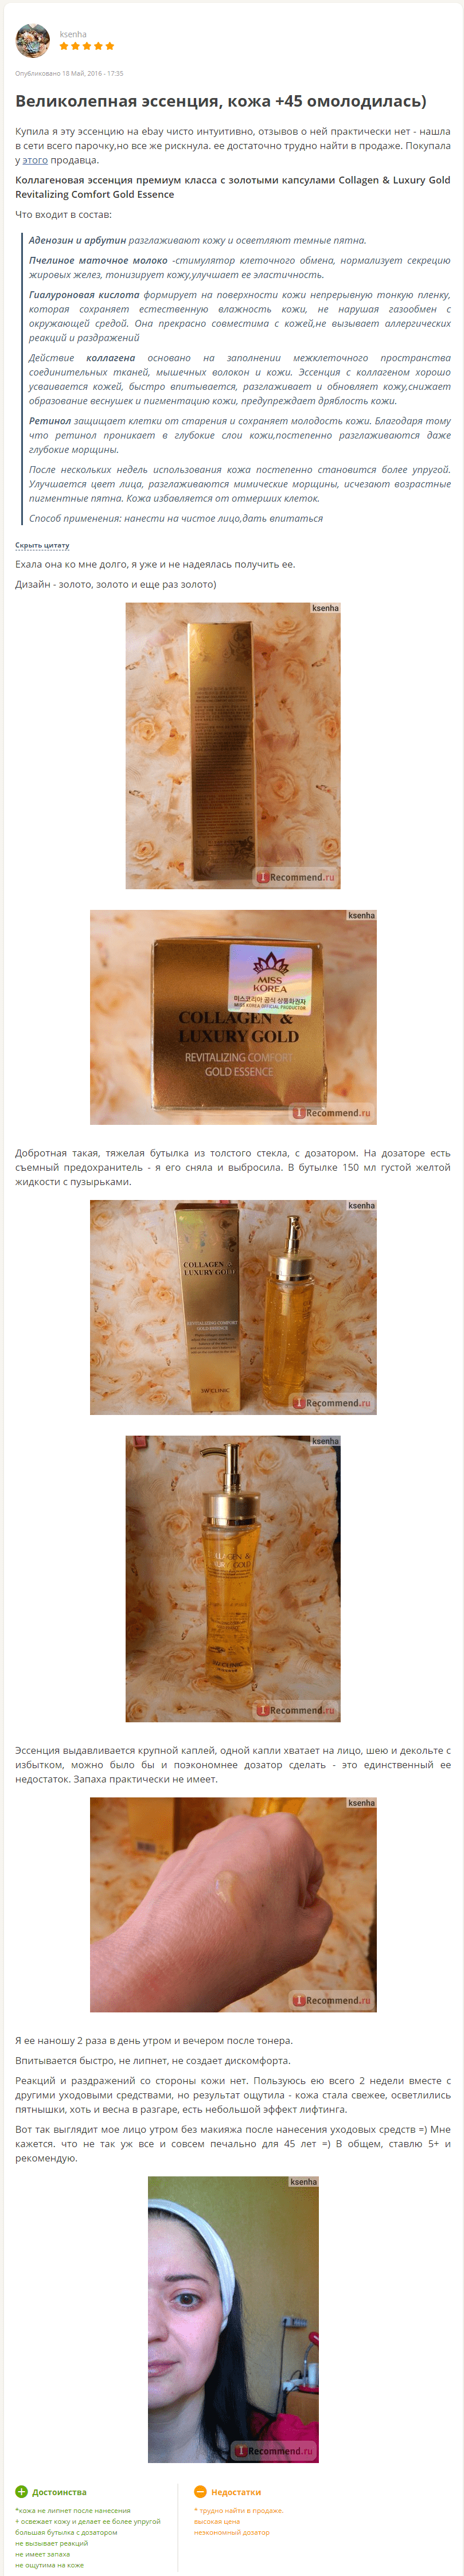 3w clinic collagen & luxury gold essence отзыв-min